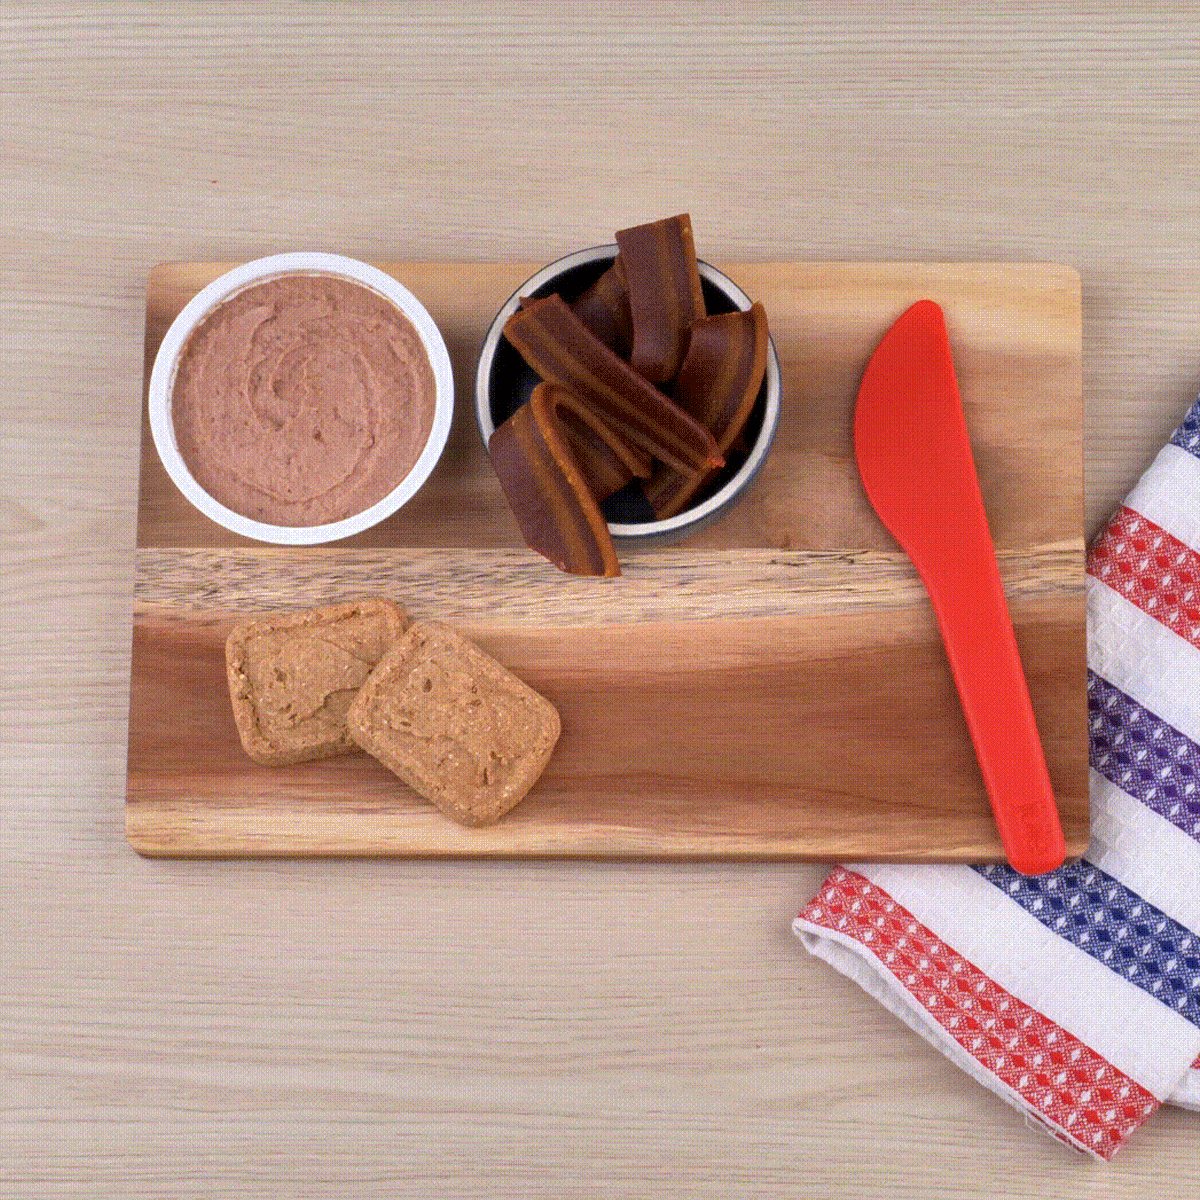 Steps for preparing the dog-friendly Filet Mignon Breakfast Sandwich recipe using Blue Buffalo dog food